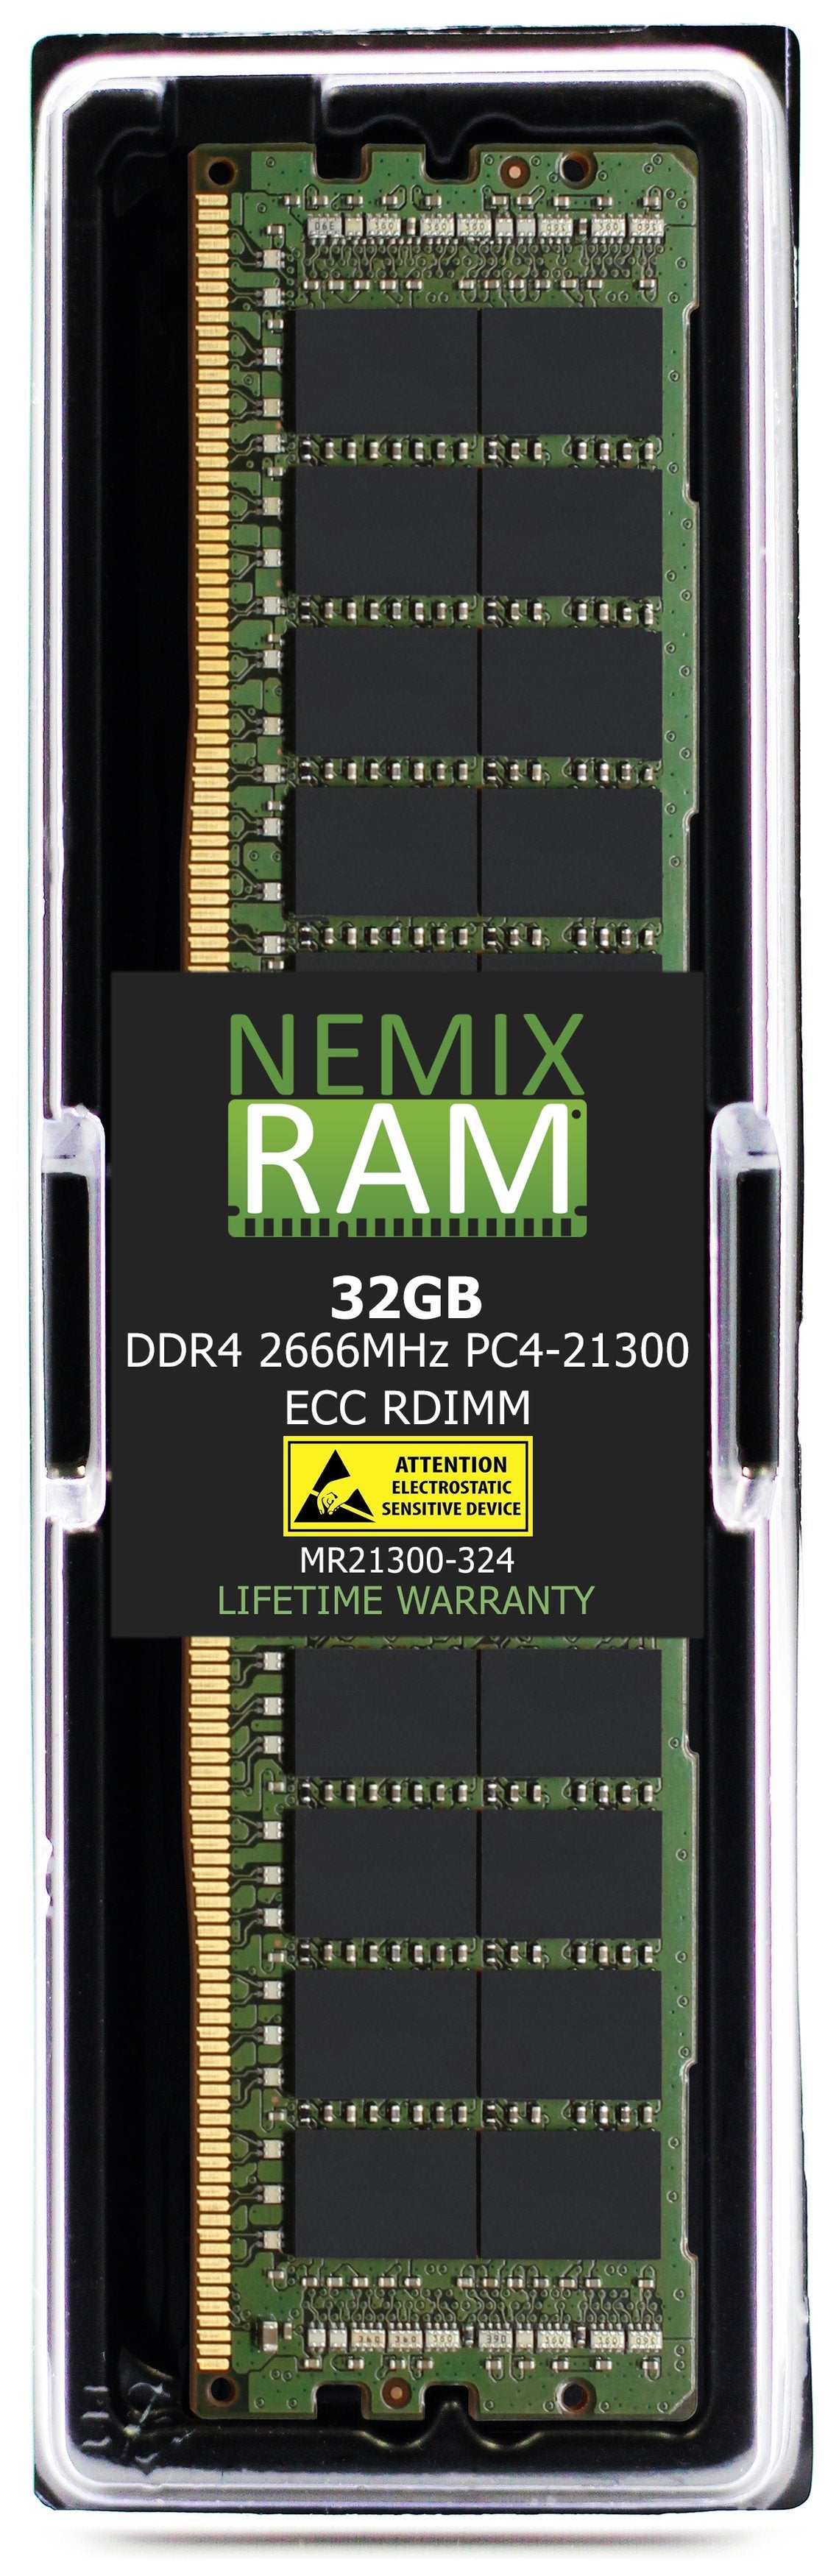 NEC Express5800 D120h Memory Module N8102-705F 32GB DDR4 2666MHZ PC4-21300 RDIMM